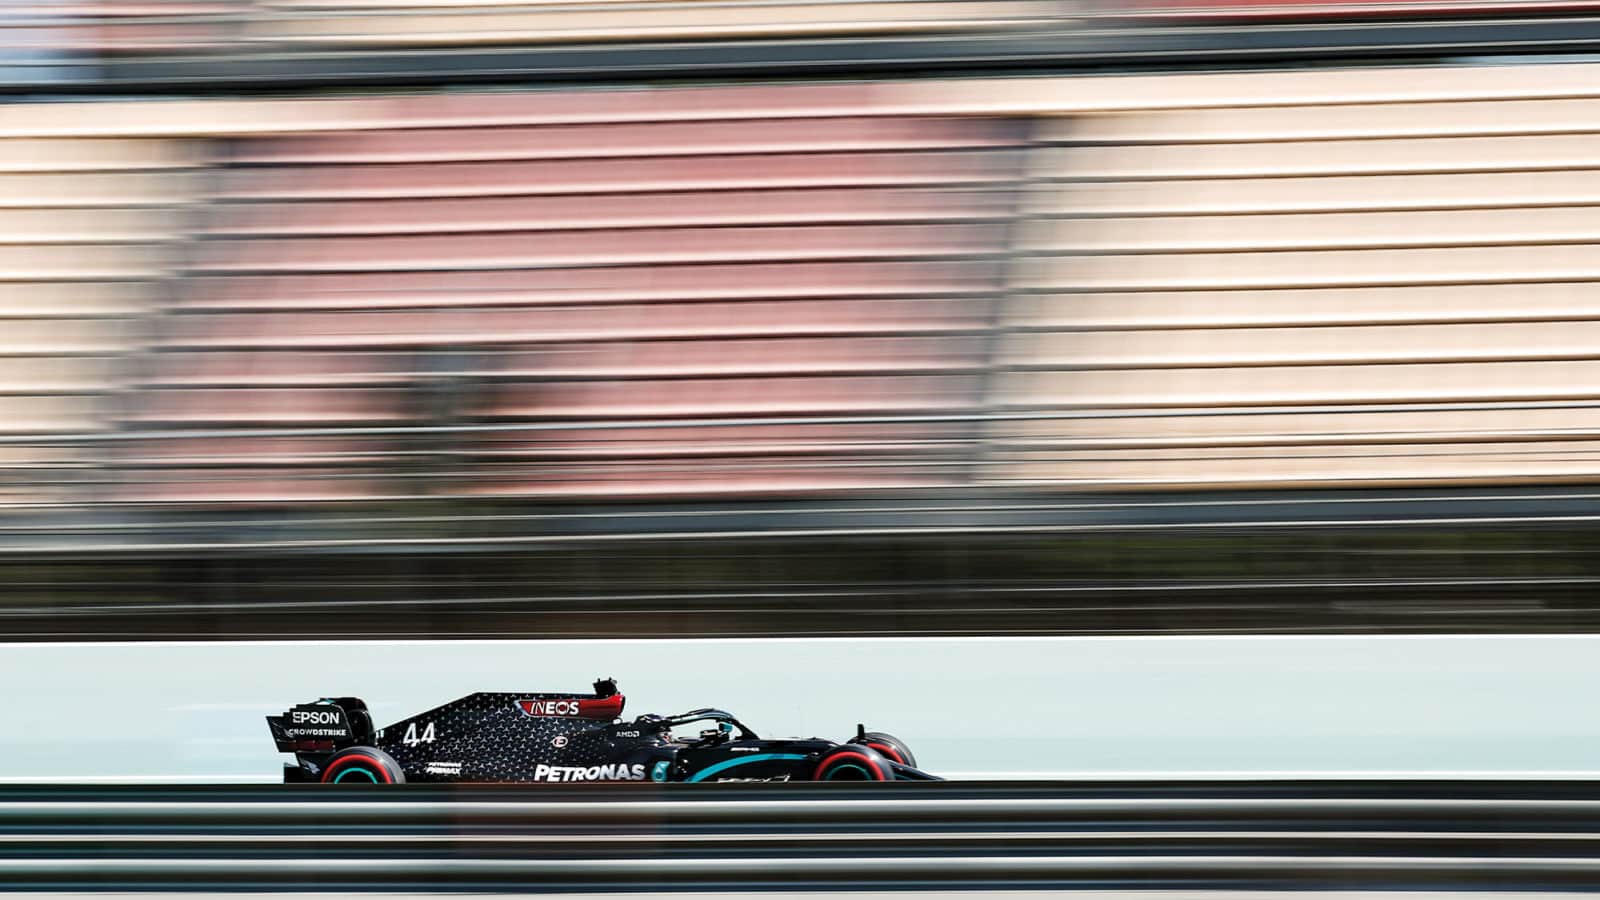 Mercedes of Lewis Hamilton in the 2020 Spanish Grand Prix